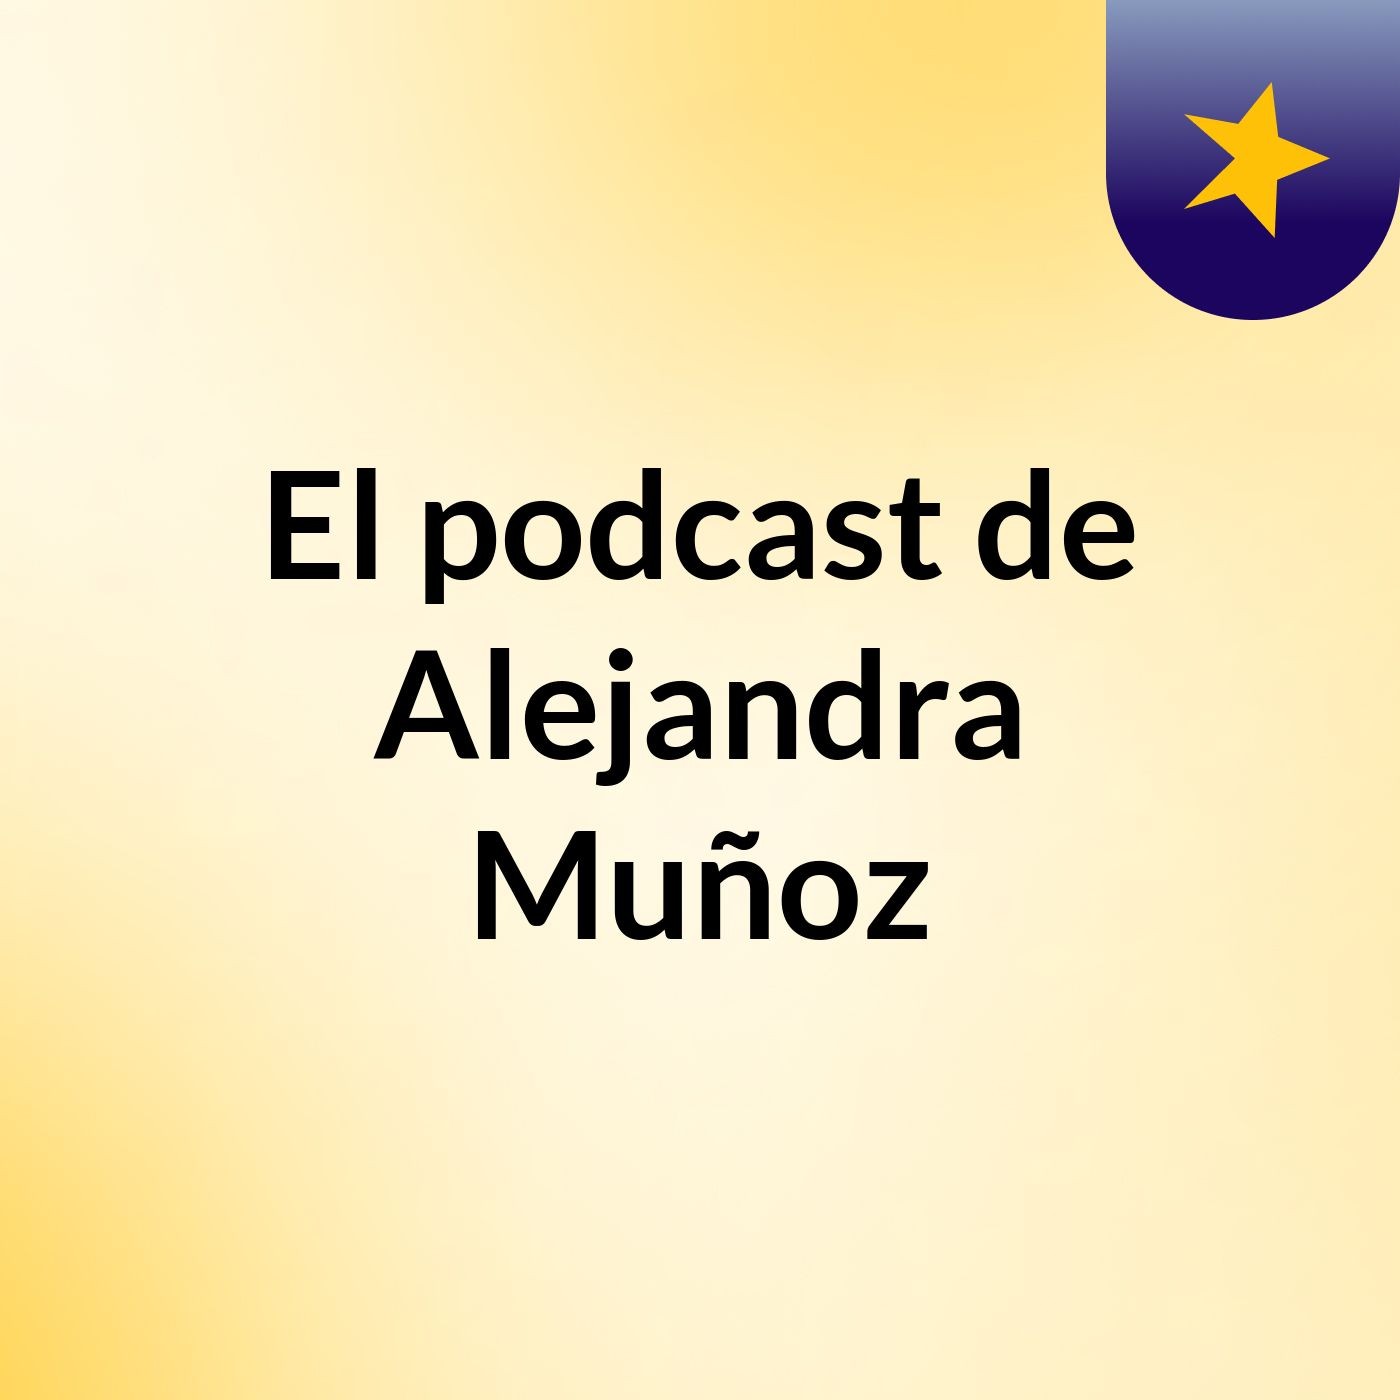 El podcast de Alejandra Muñoz